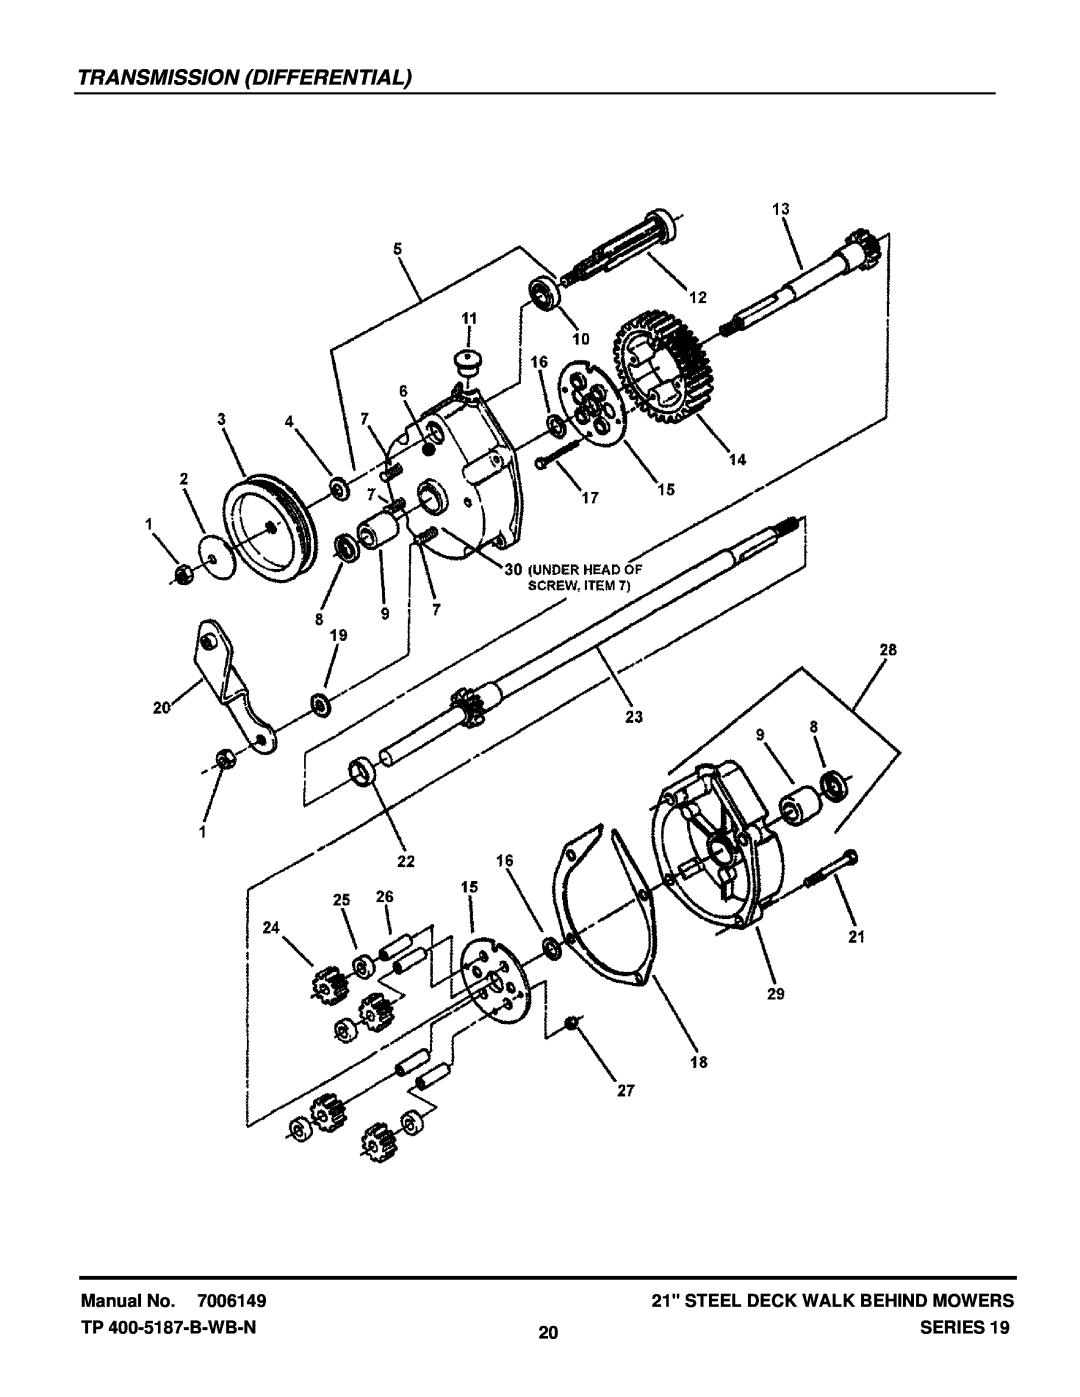 Snapper SERIES 19 manual Transmission Differential, Manual No, Steel Deck Walk Behind Mowers, TP 400-5187-B-WB-N, Series 